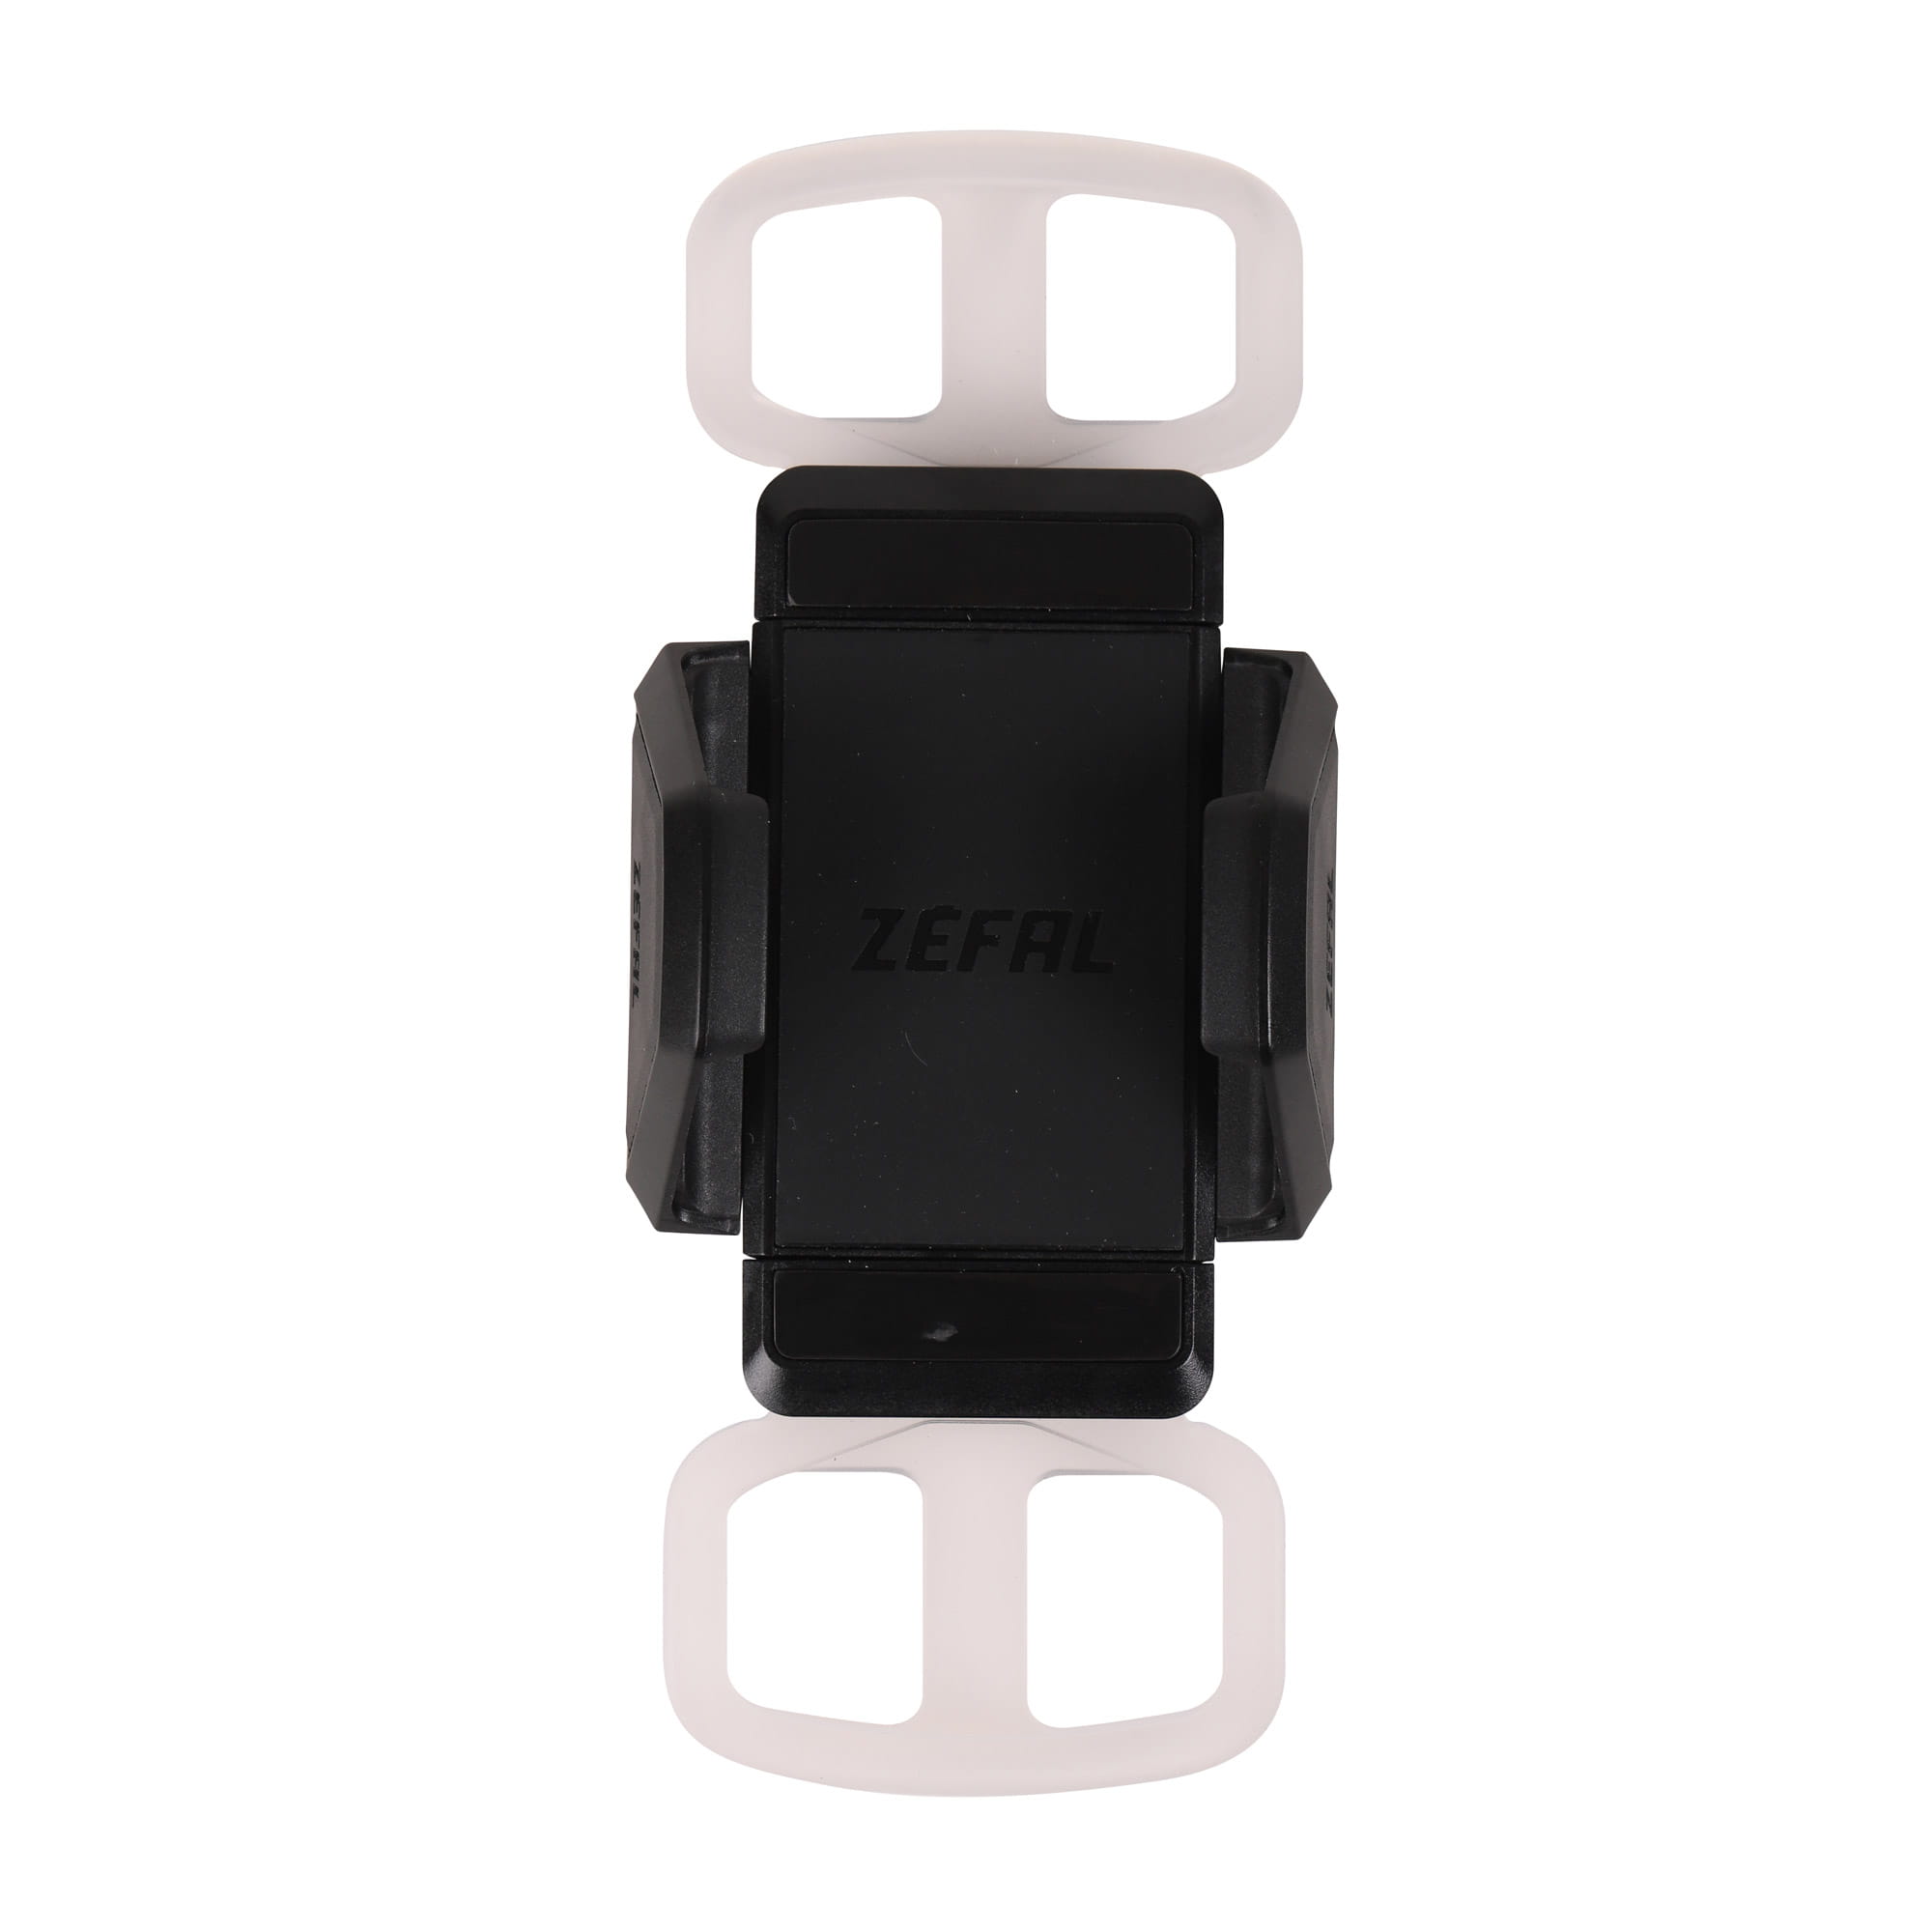 Zefal Universal Phone Holder Smartphonehalterung